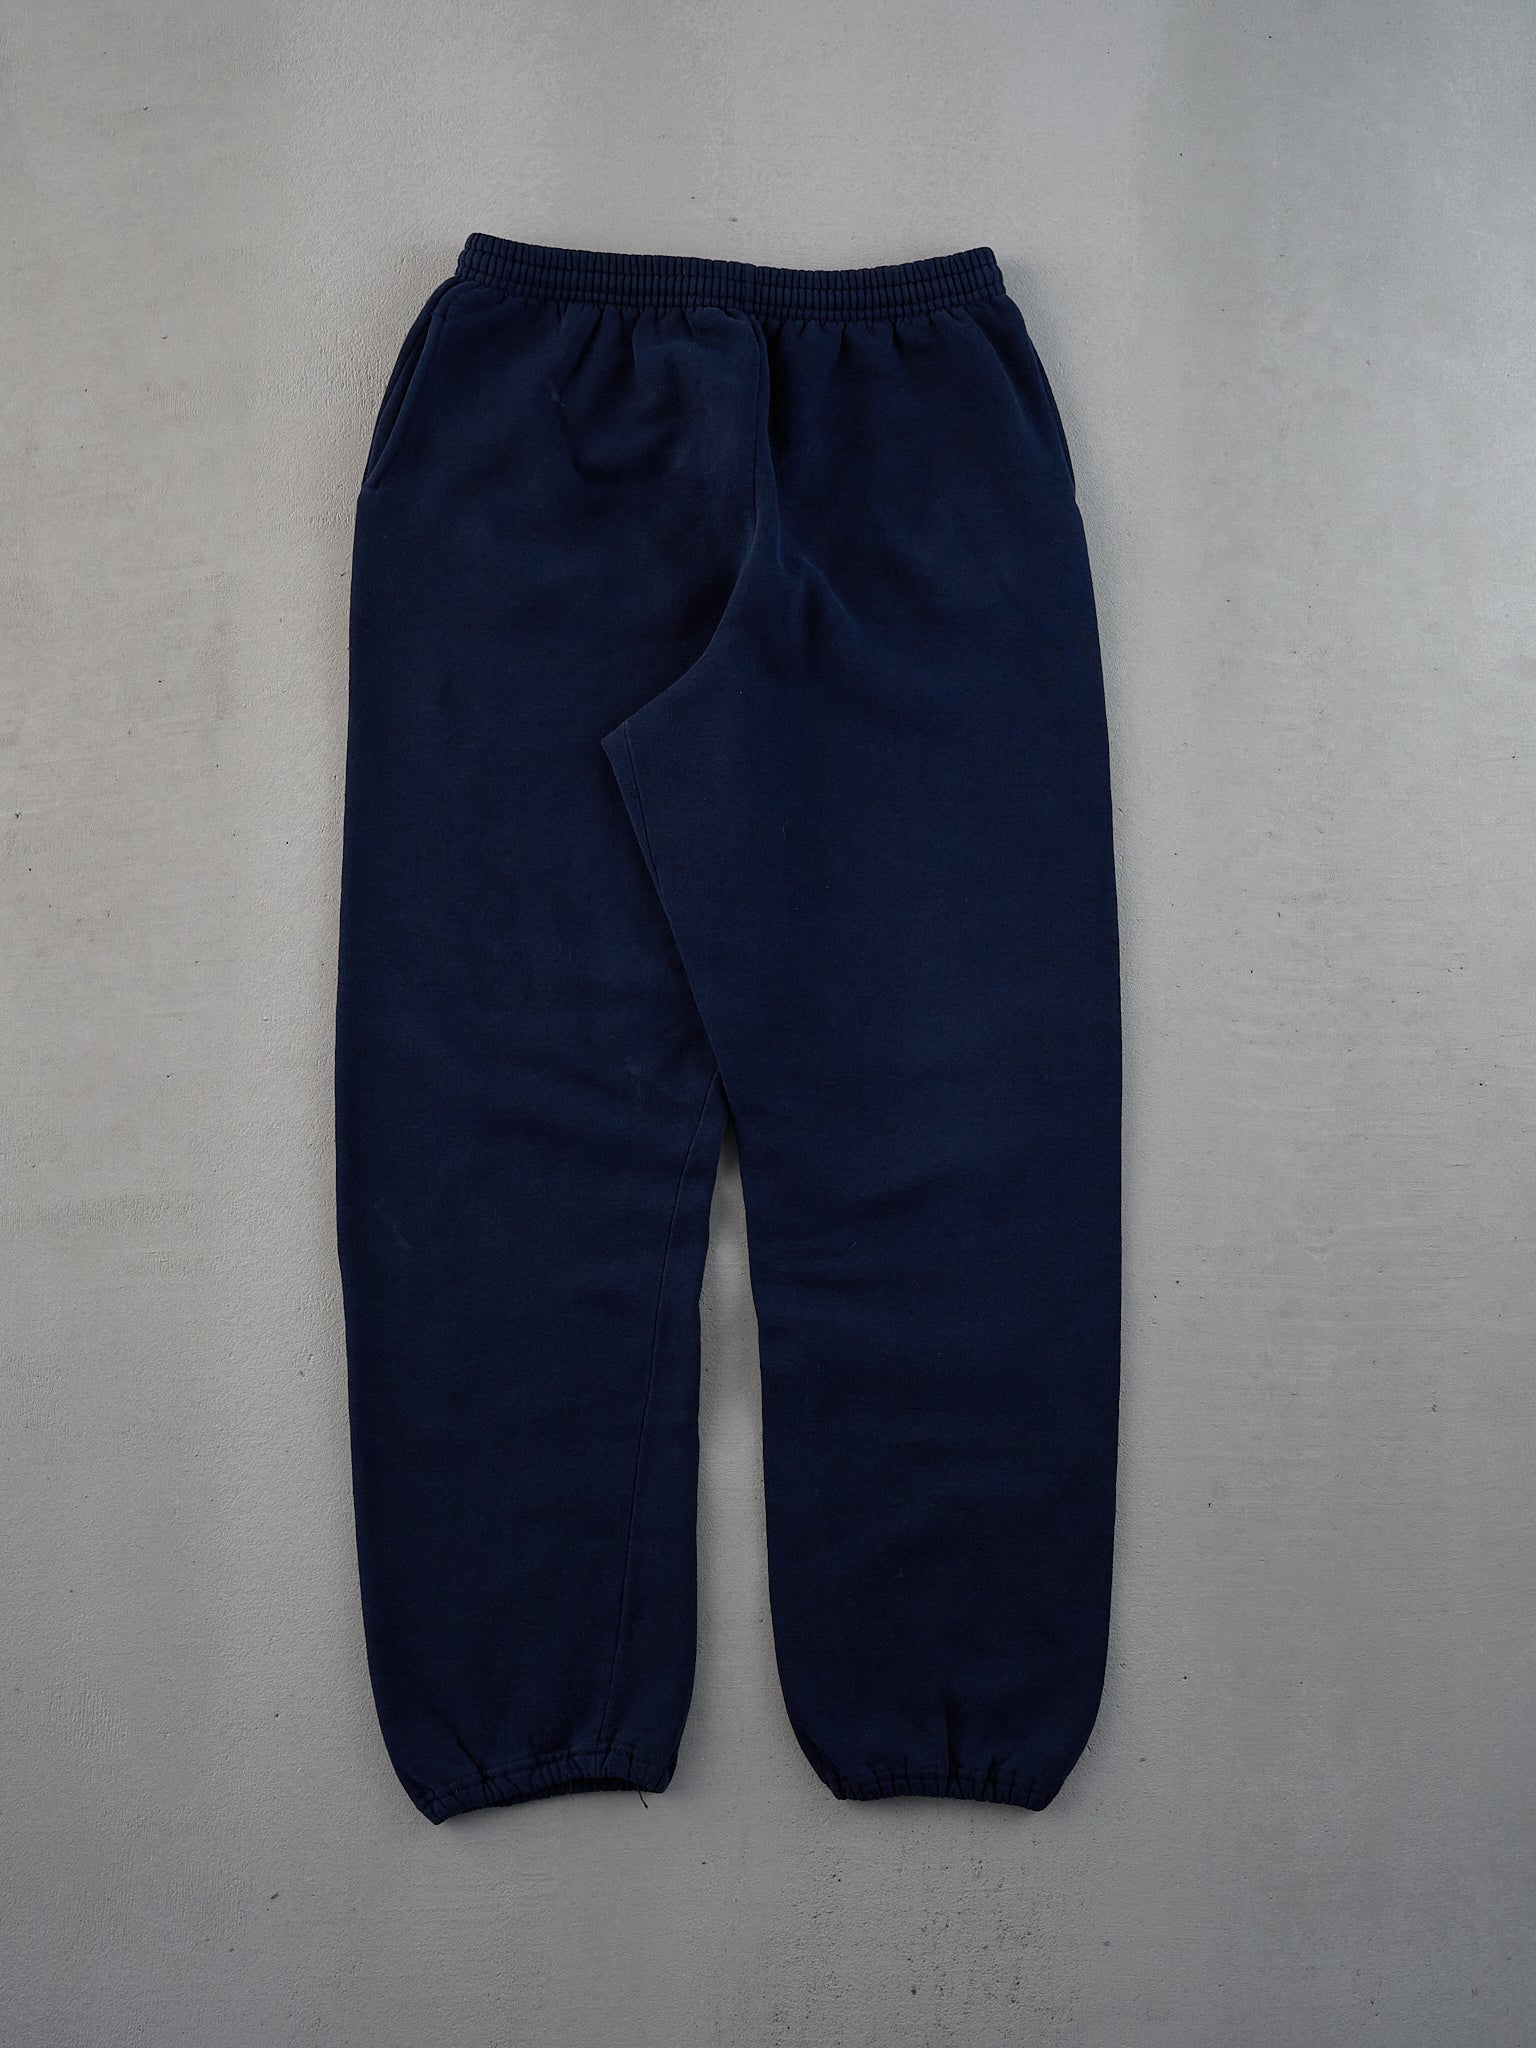 Vintage 90s Navy Blue Rusell Athletics Sweat Pants (28x29)